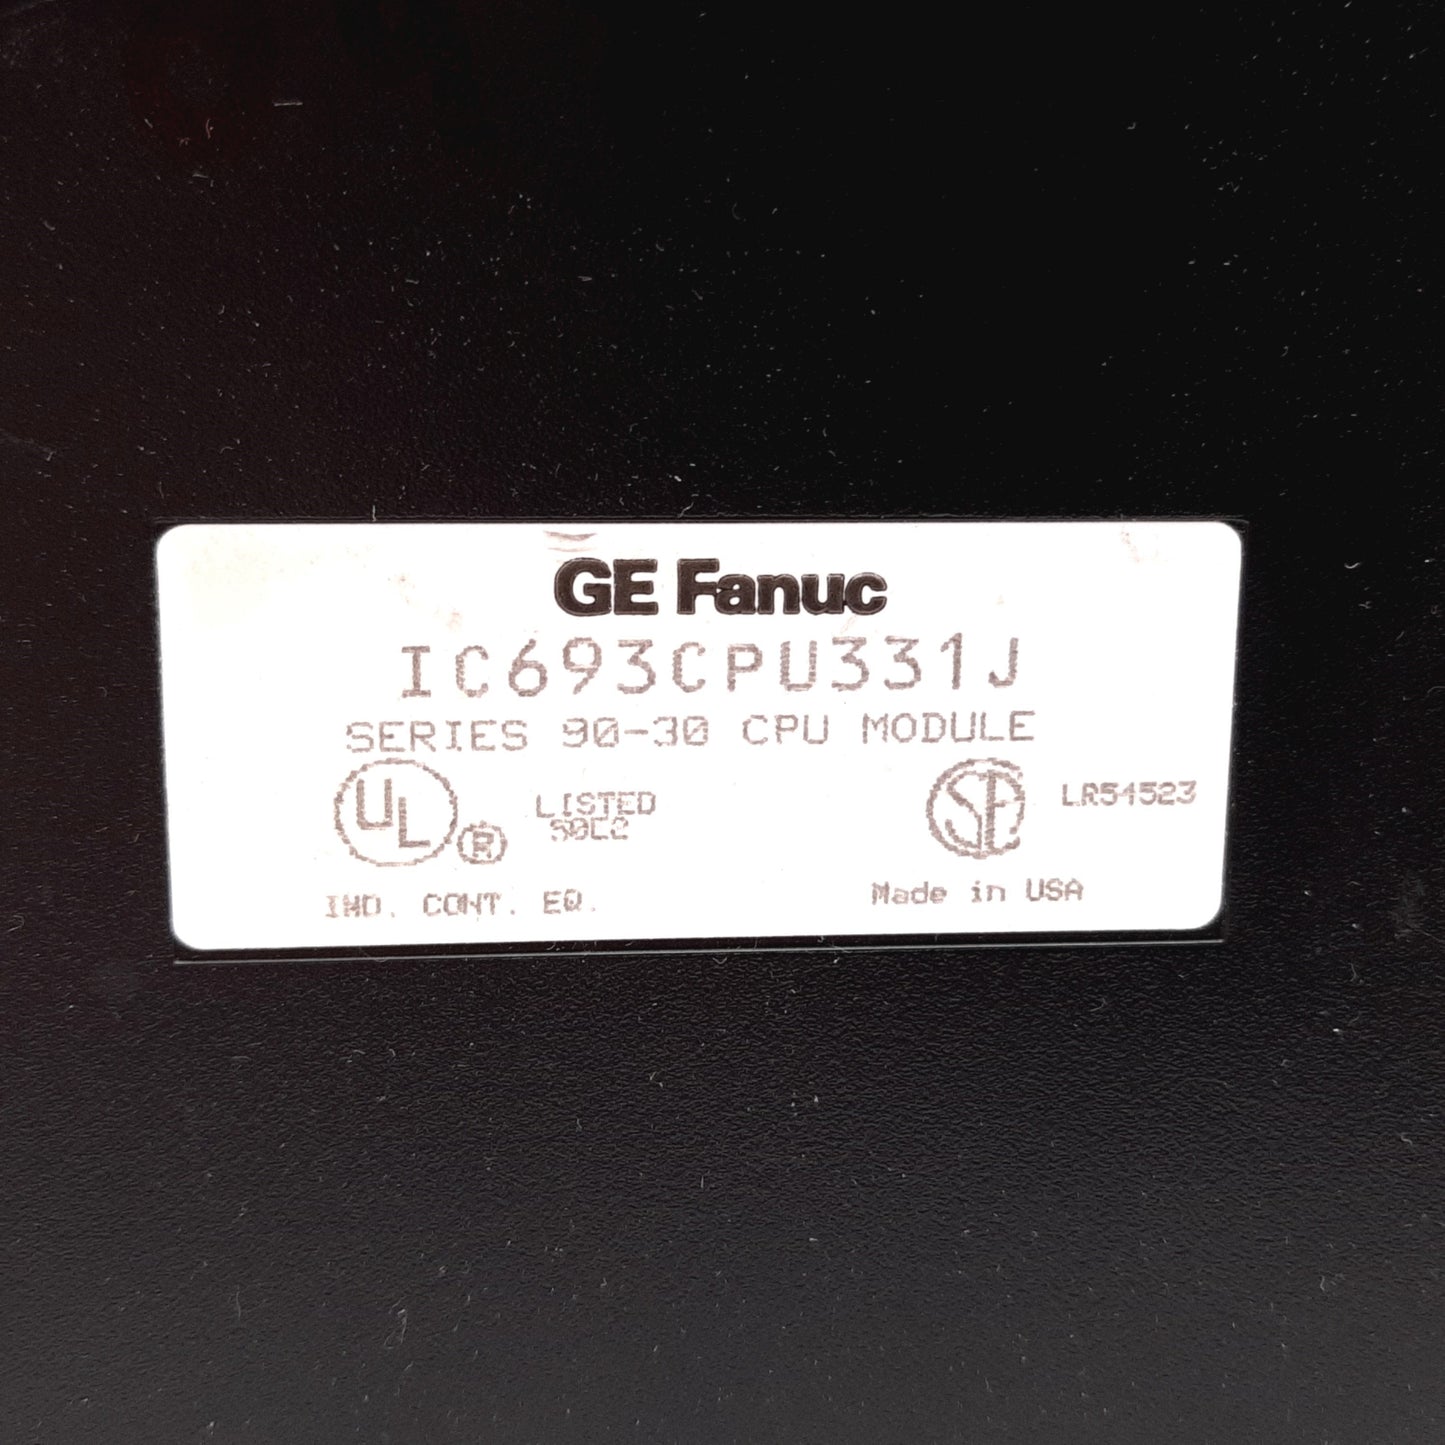 Used GE Fanuc IC693CPU331J Series 90-30 CPU Module, 4KB Register Memory 16-Bit System